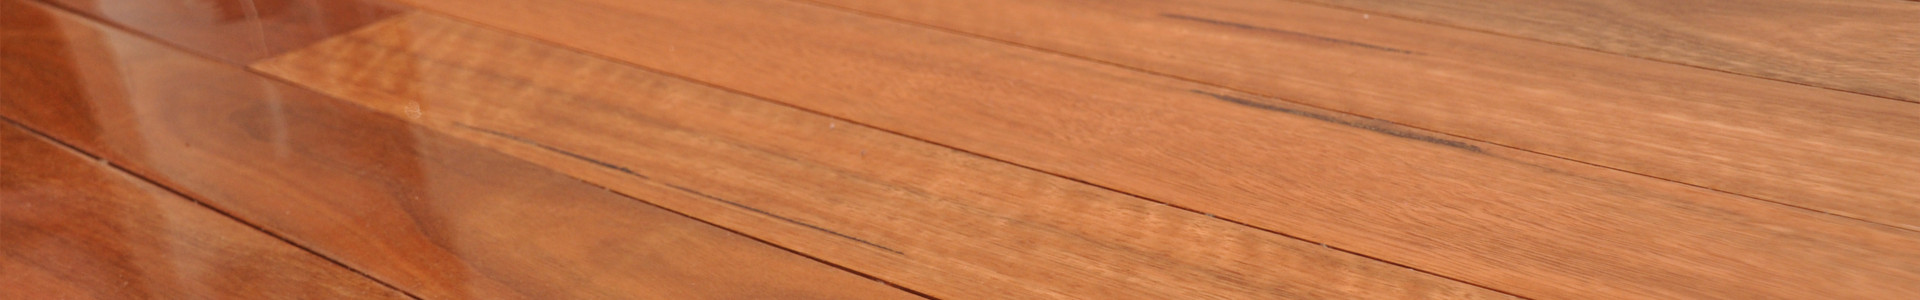 Timber Flooring Adelaide | Timber Floors Experts Adelaide